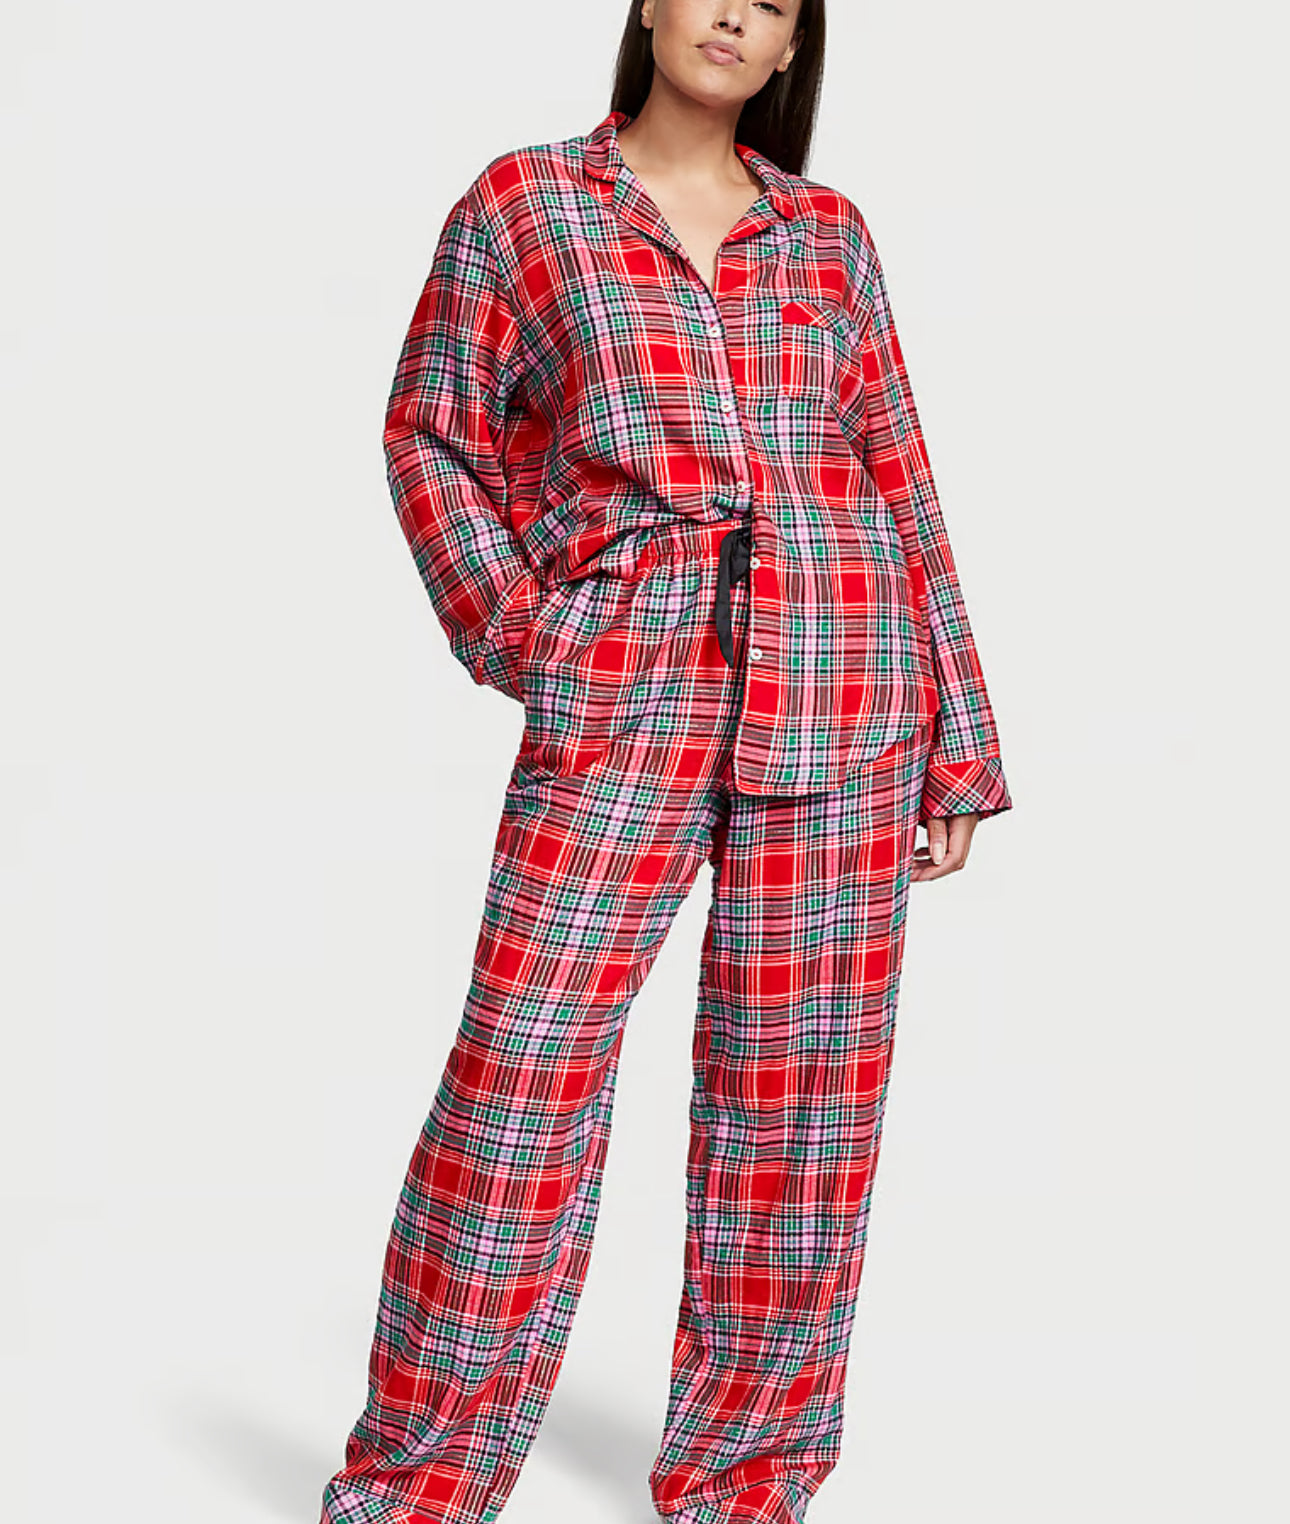 Set pijama de franela Victoria’s Secret